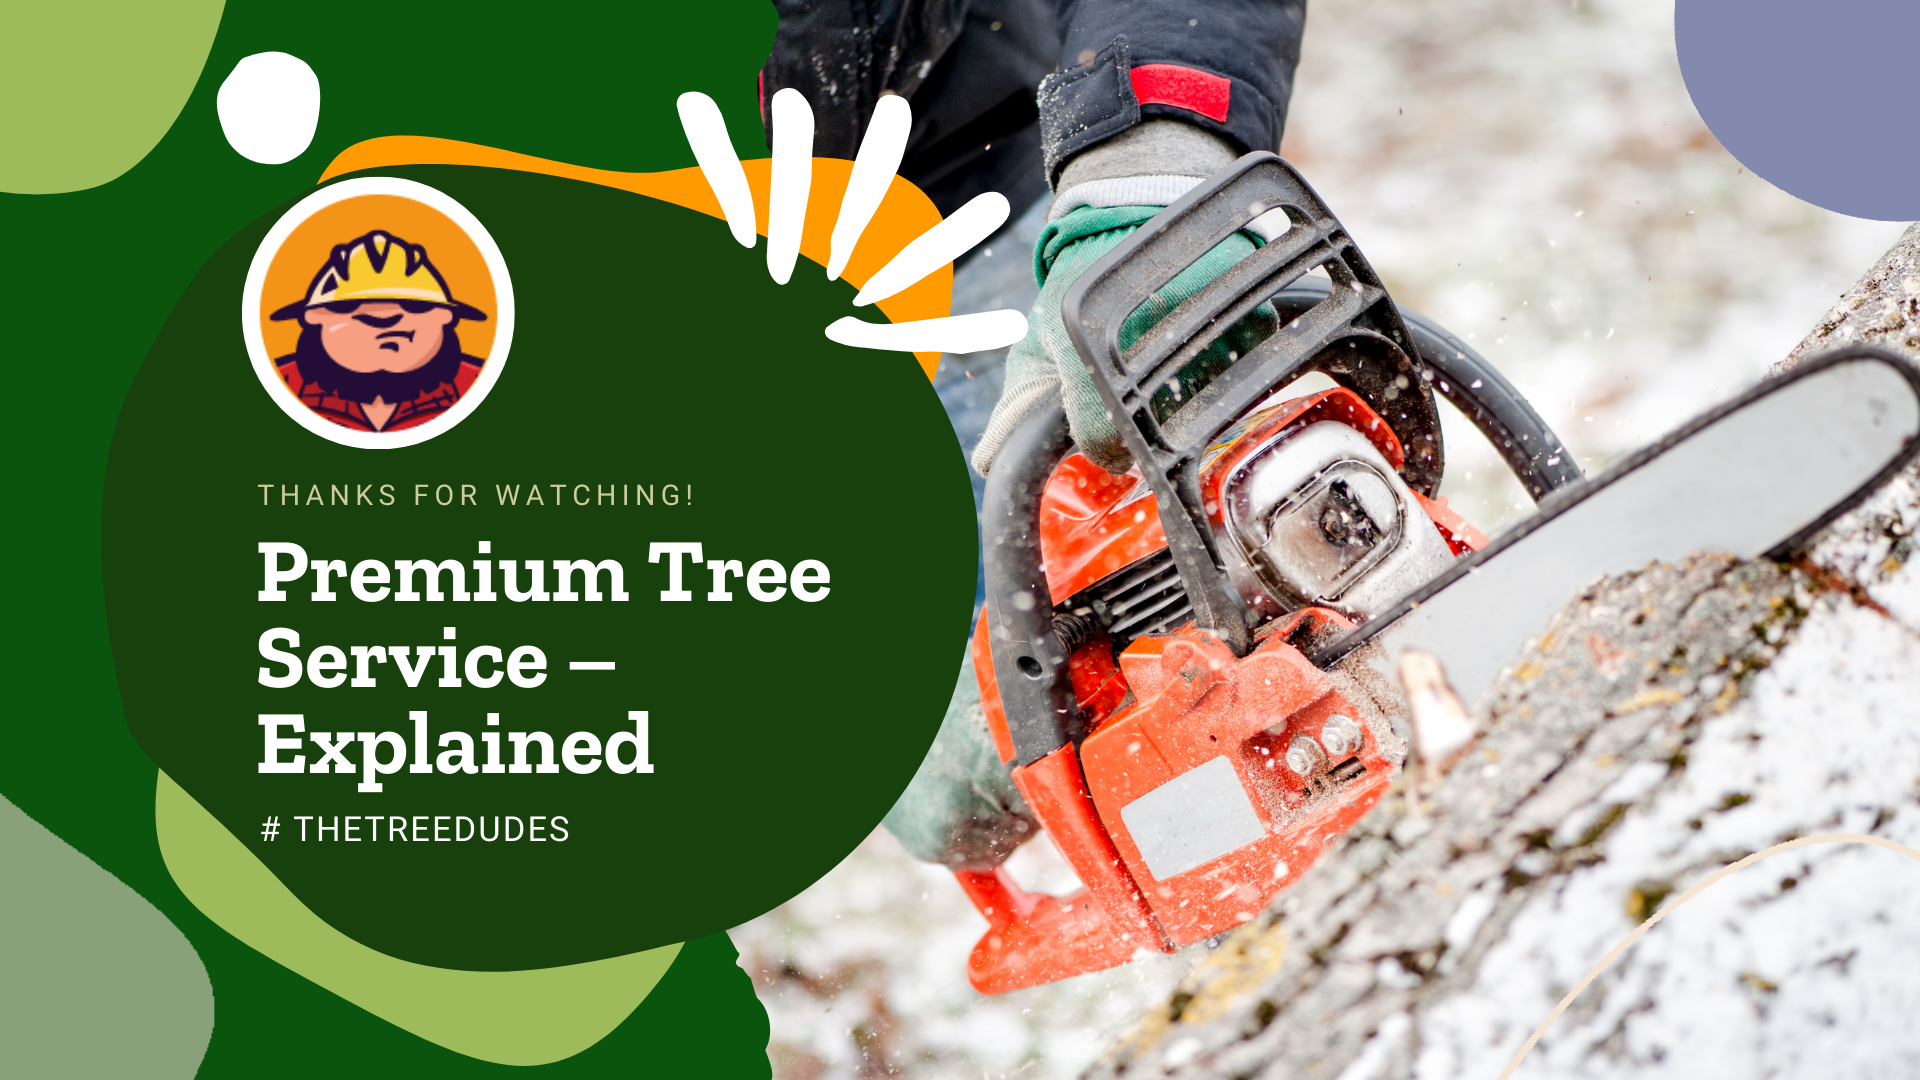 Premium Tree Service - Explained